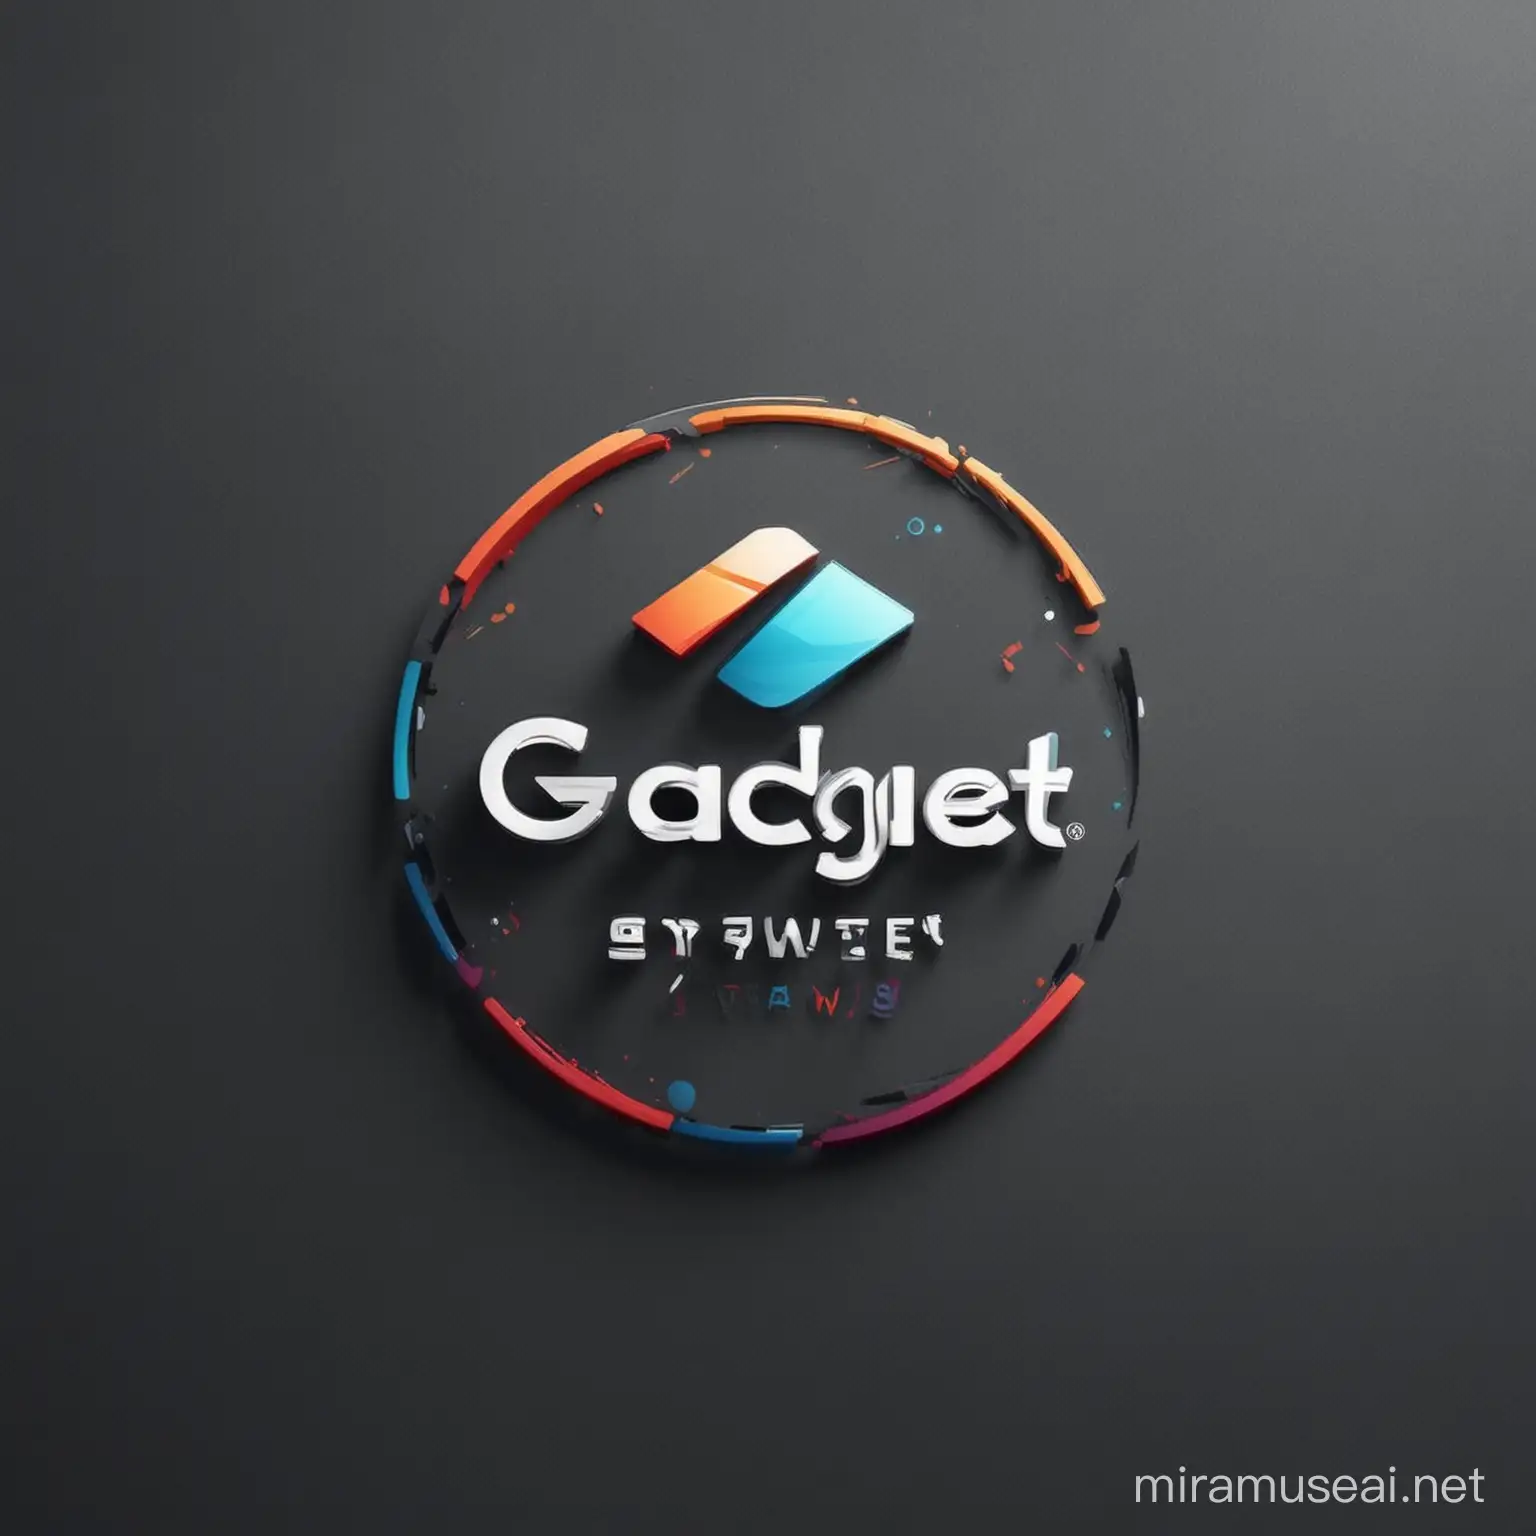 Modern Gadget Brand Store Logo with Sleek Design Elements